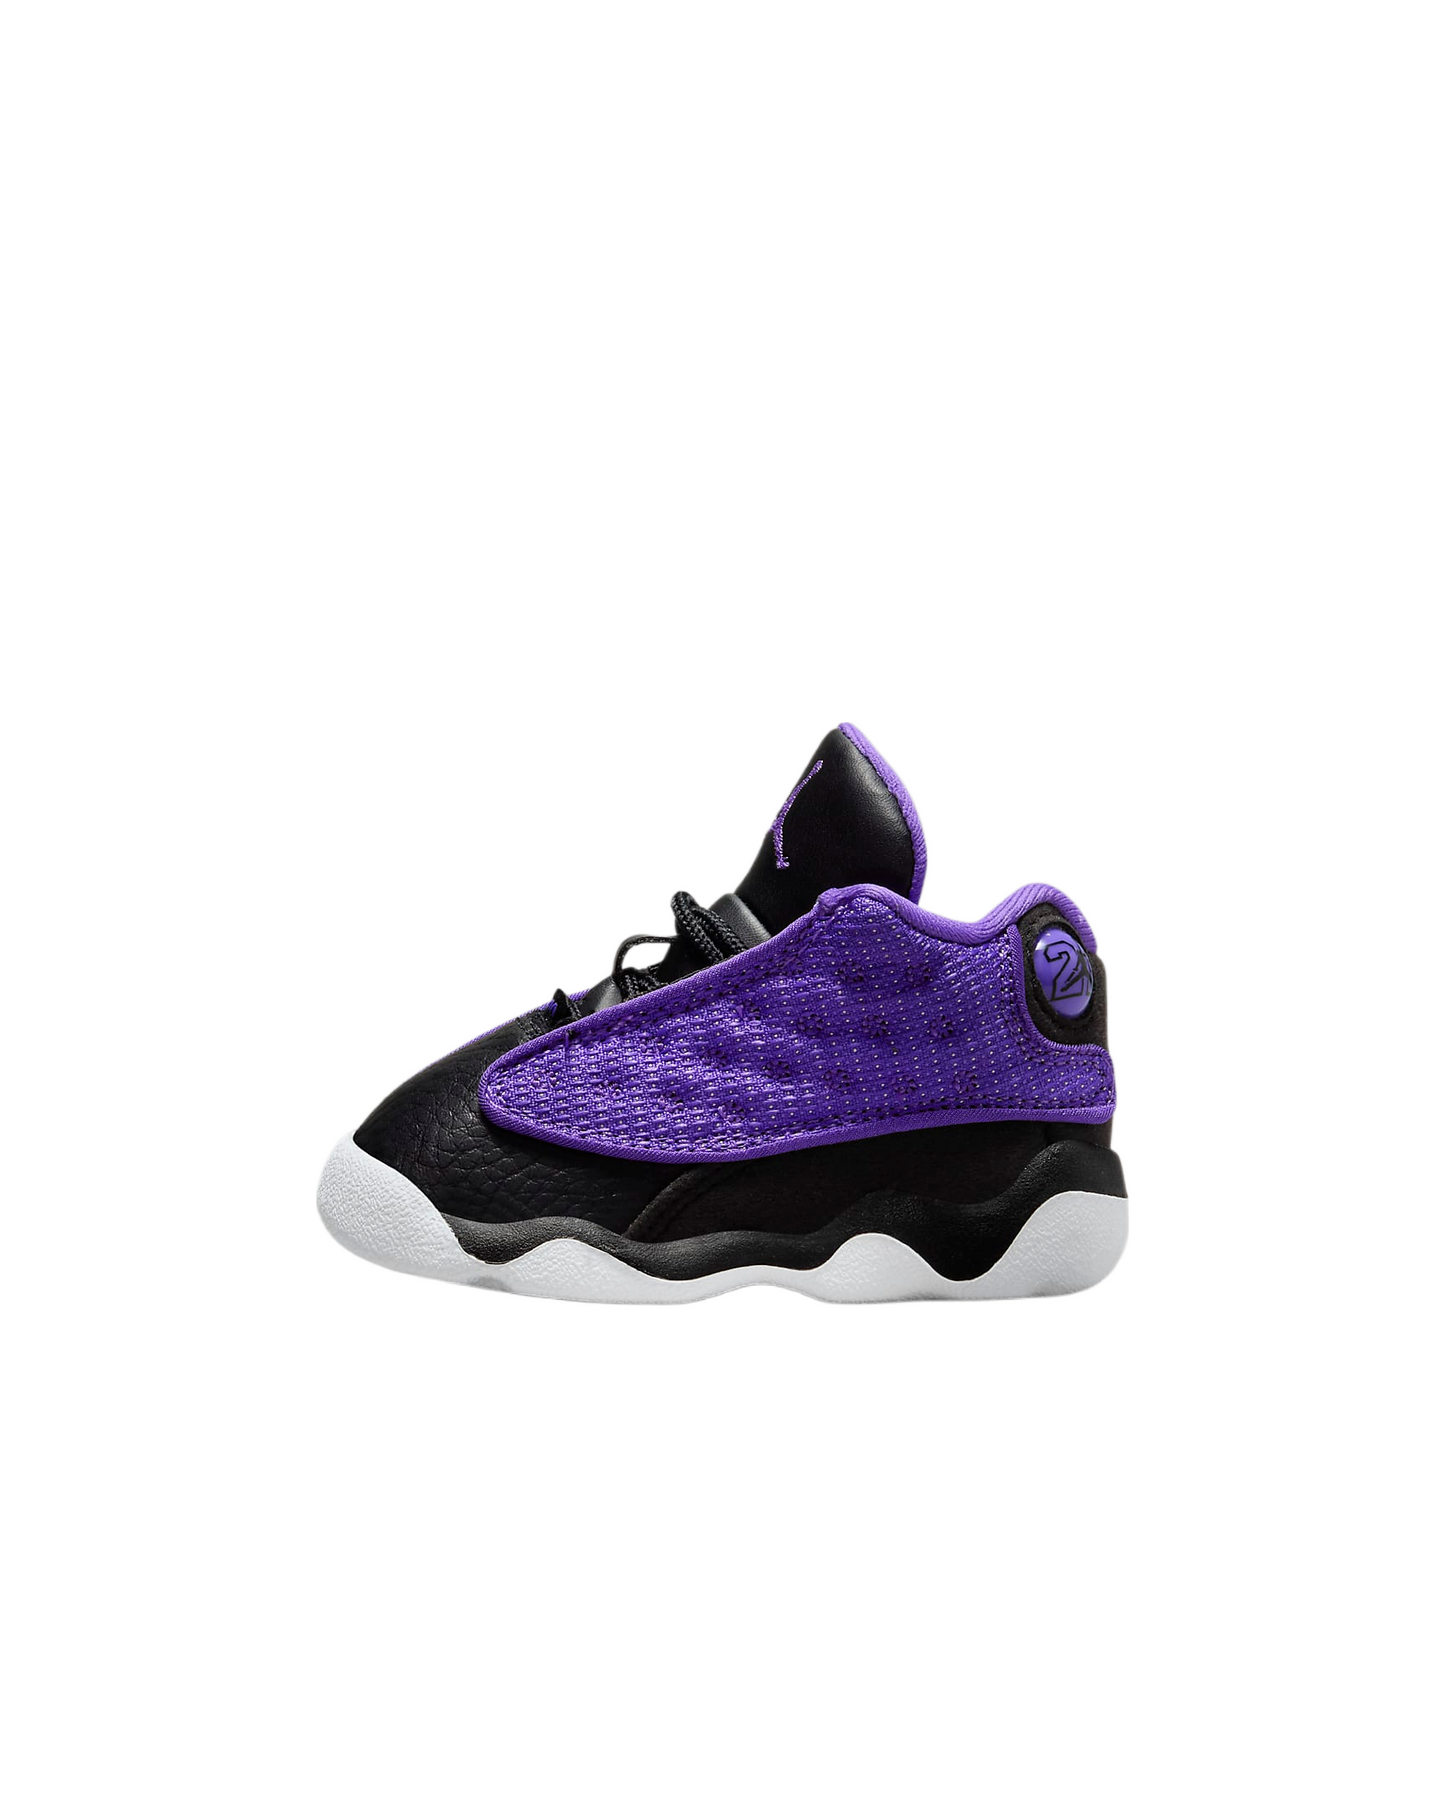 Jordan 13 Retro Toddler Sneaker Purple Venom / Black-White FD4647-501